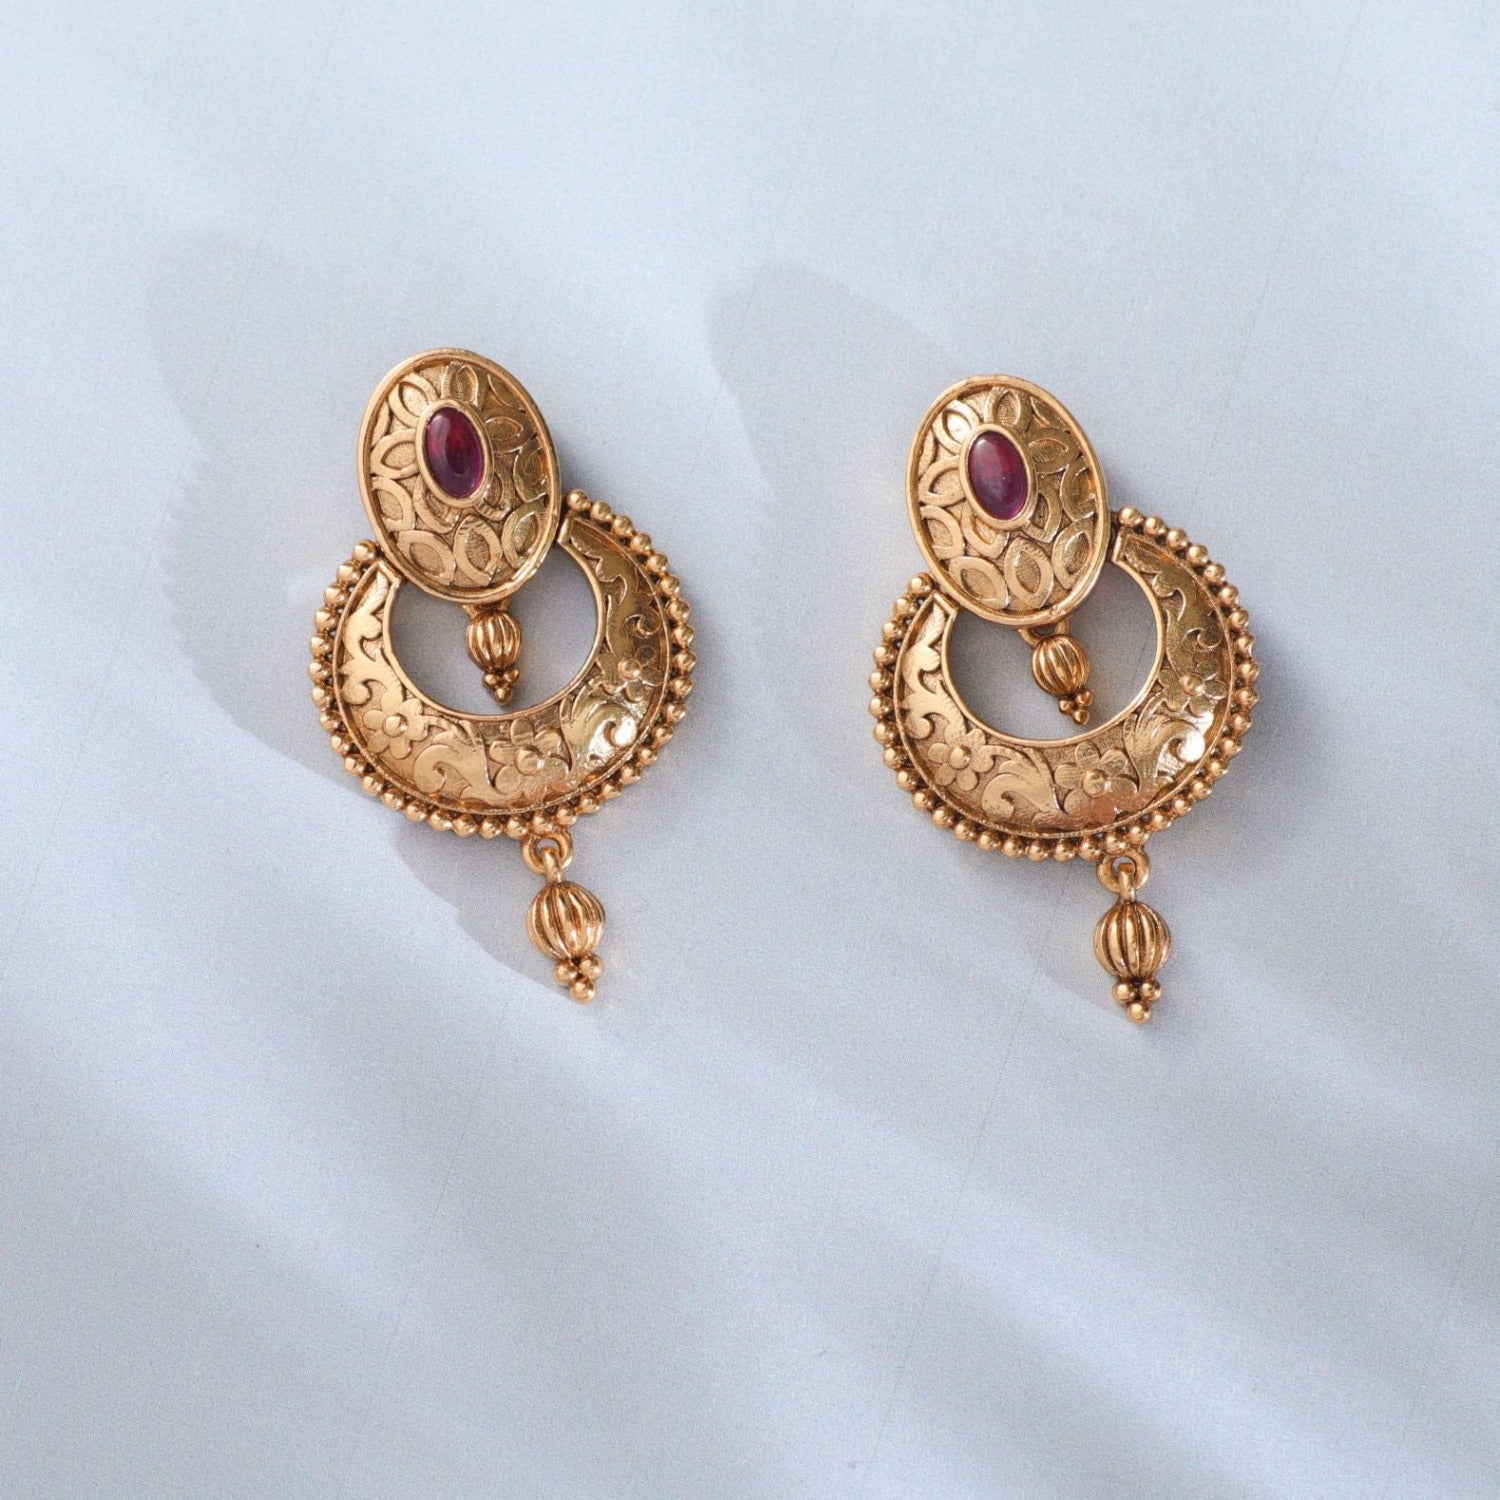 CARANS meena light weight chandbali earrings, Yellow, 1 pair of earrings